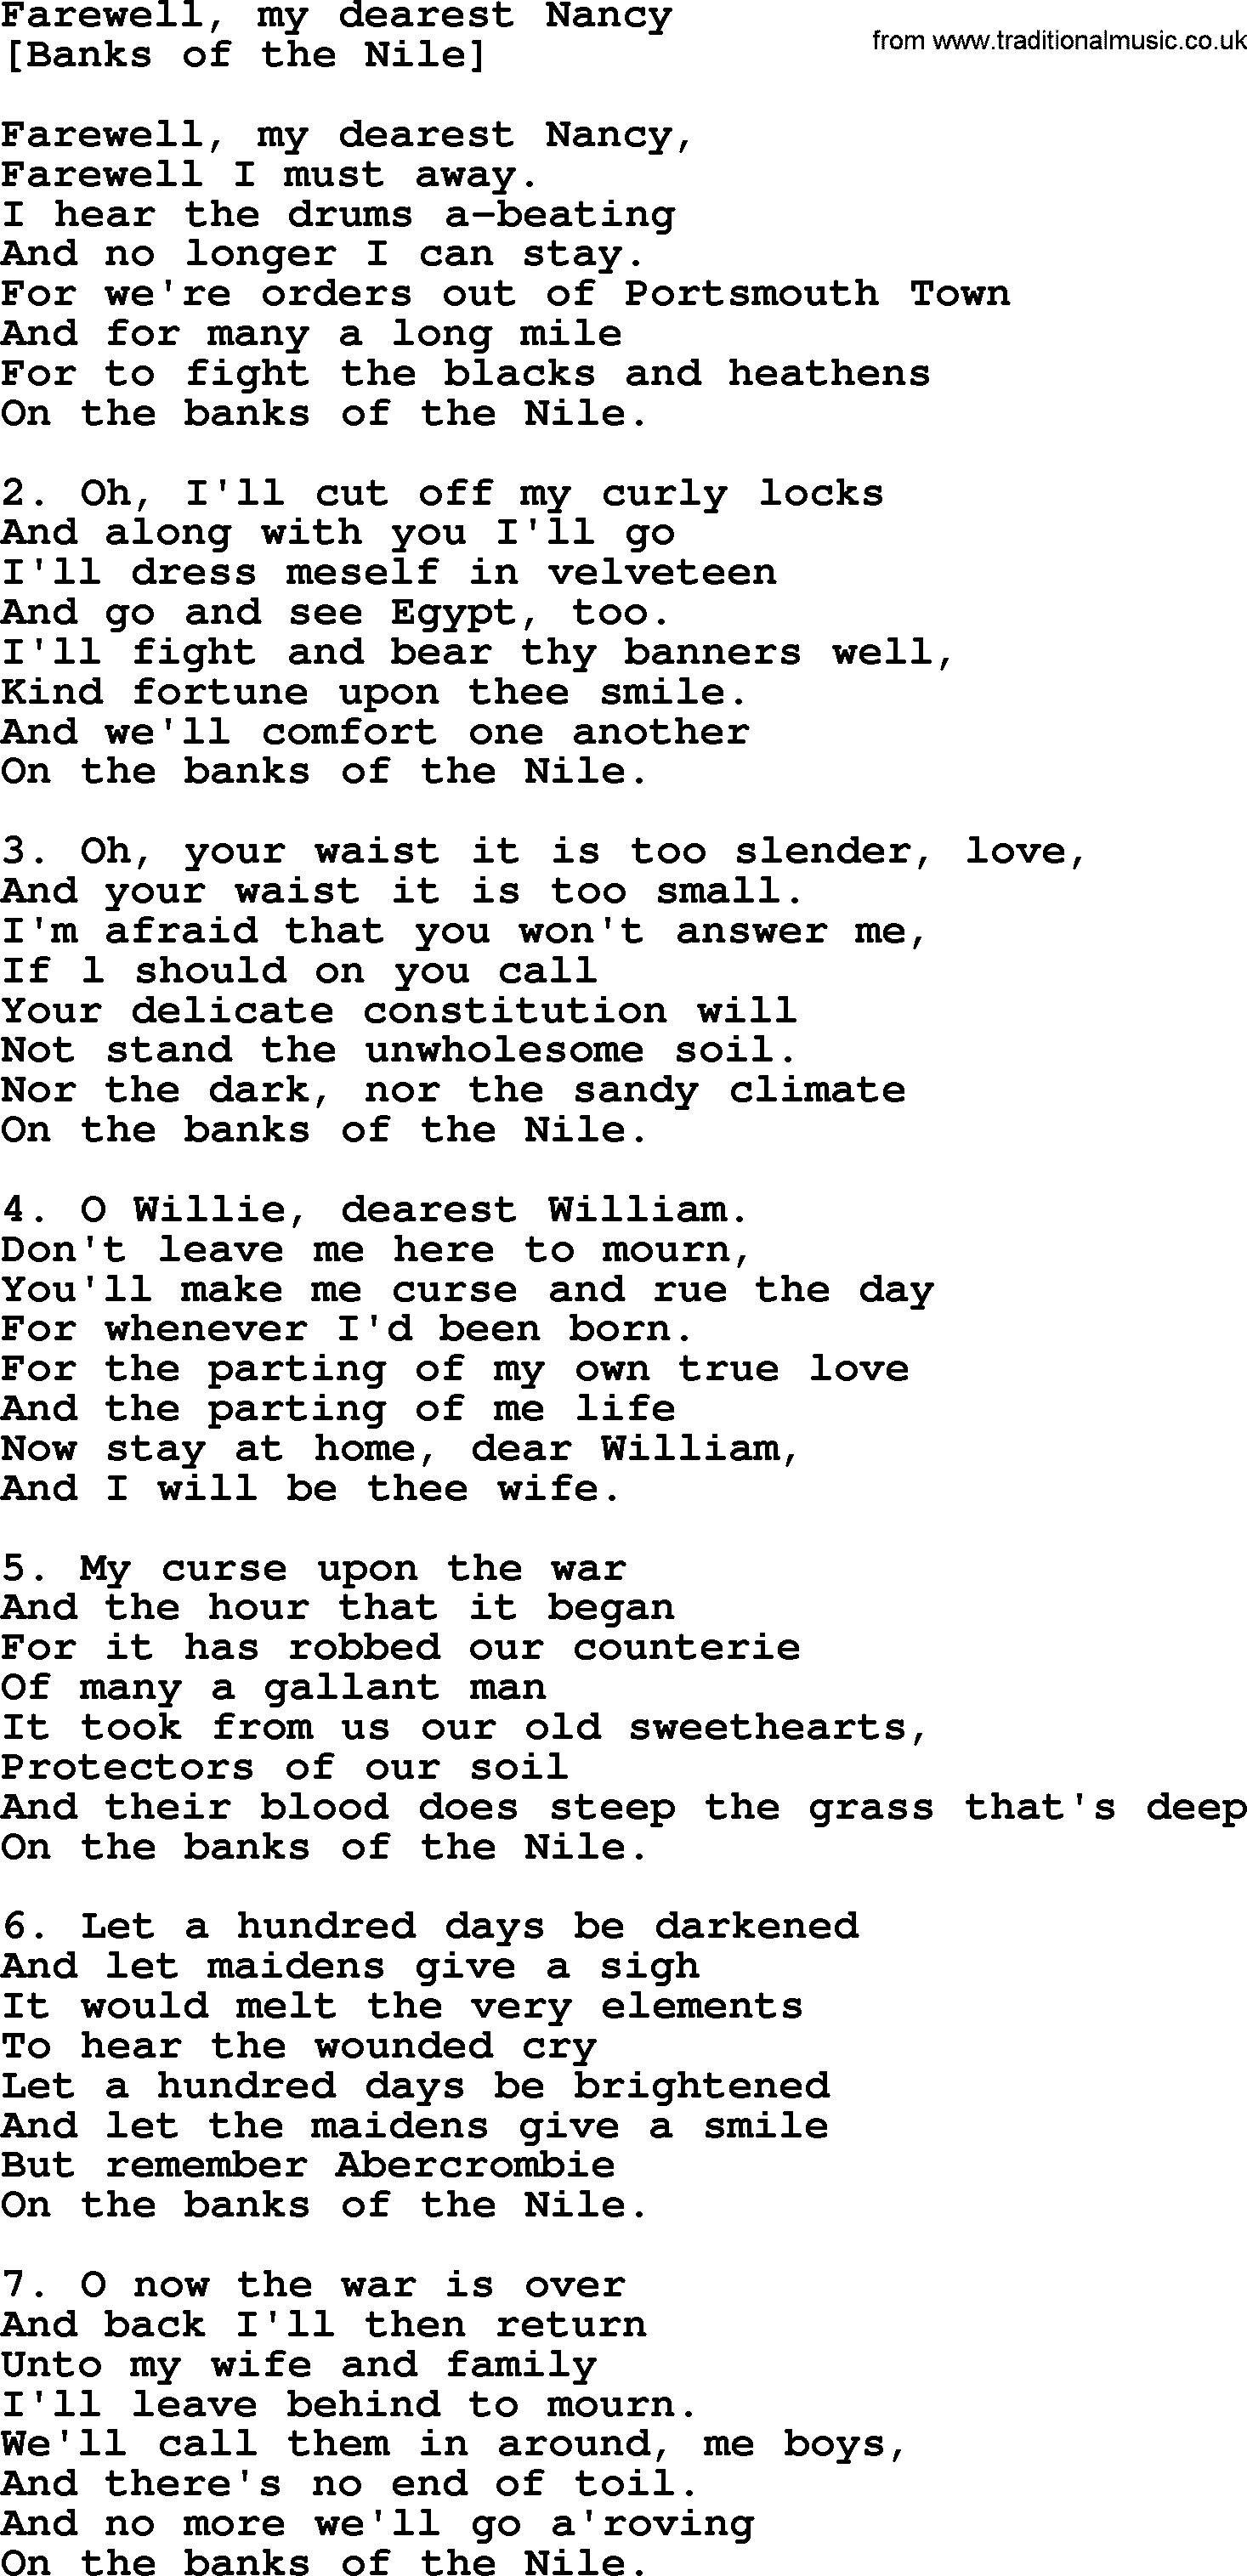 Old English Song: Farewell, My Dearest Nancy lyrics